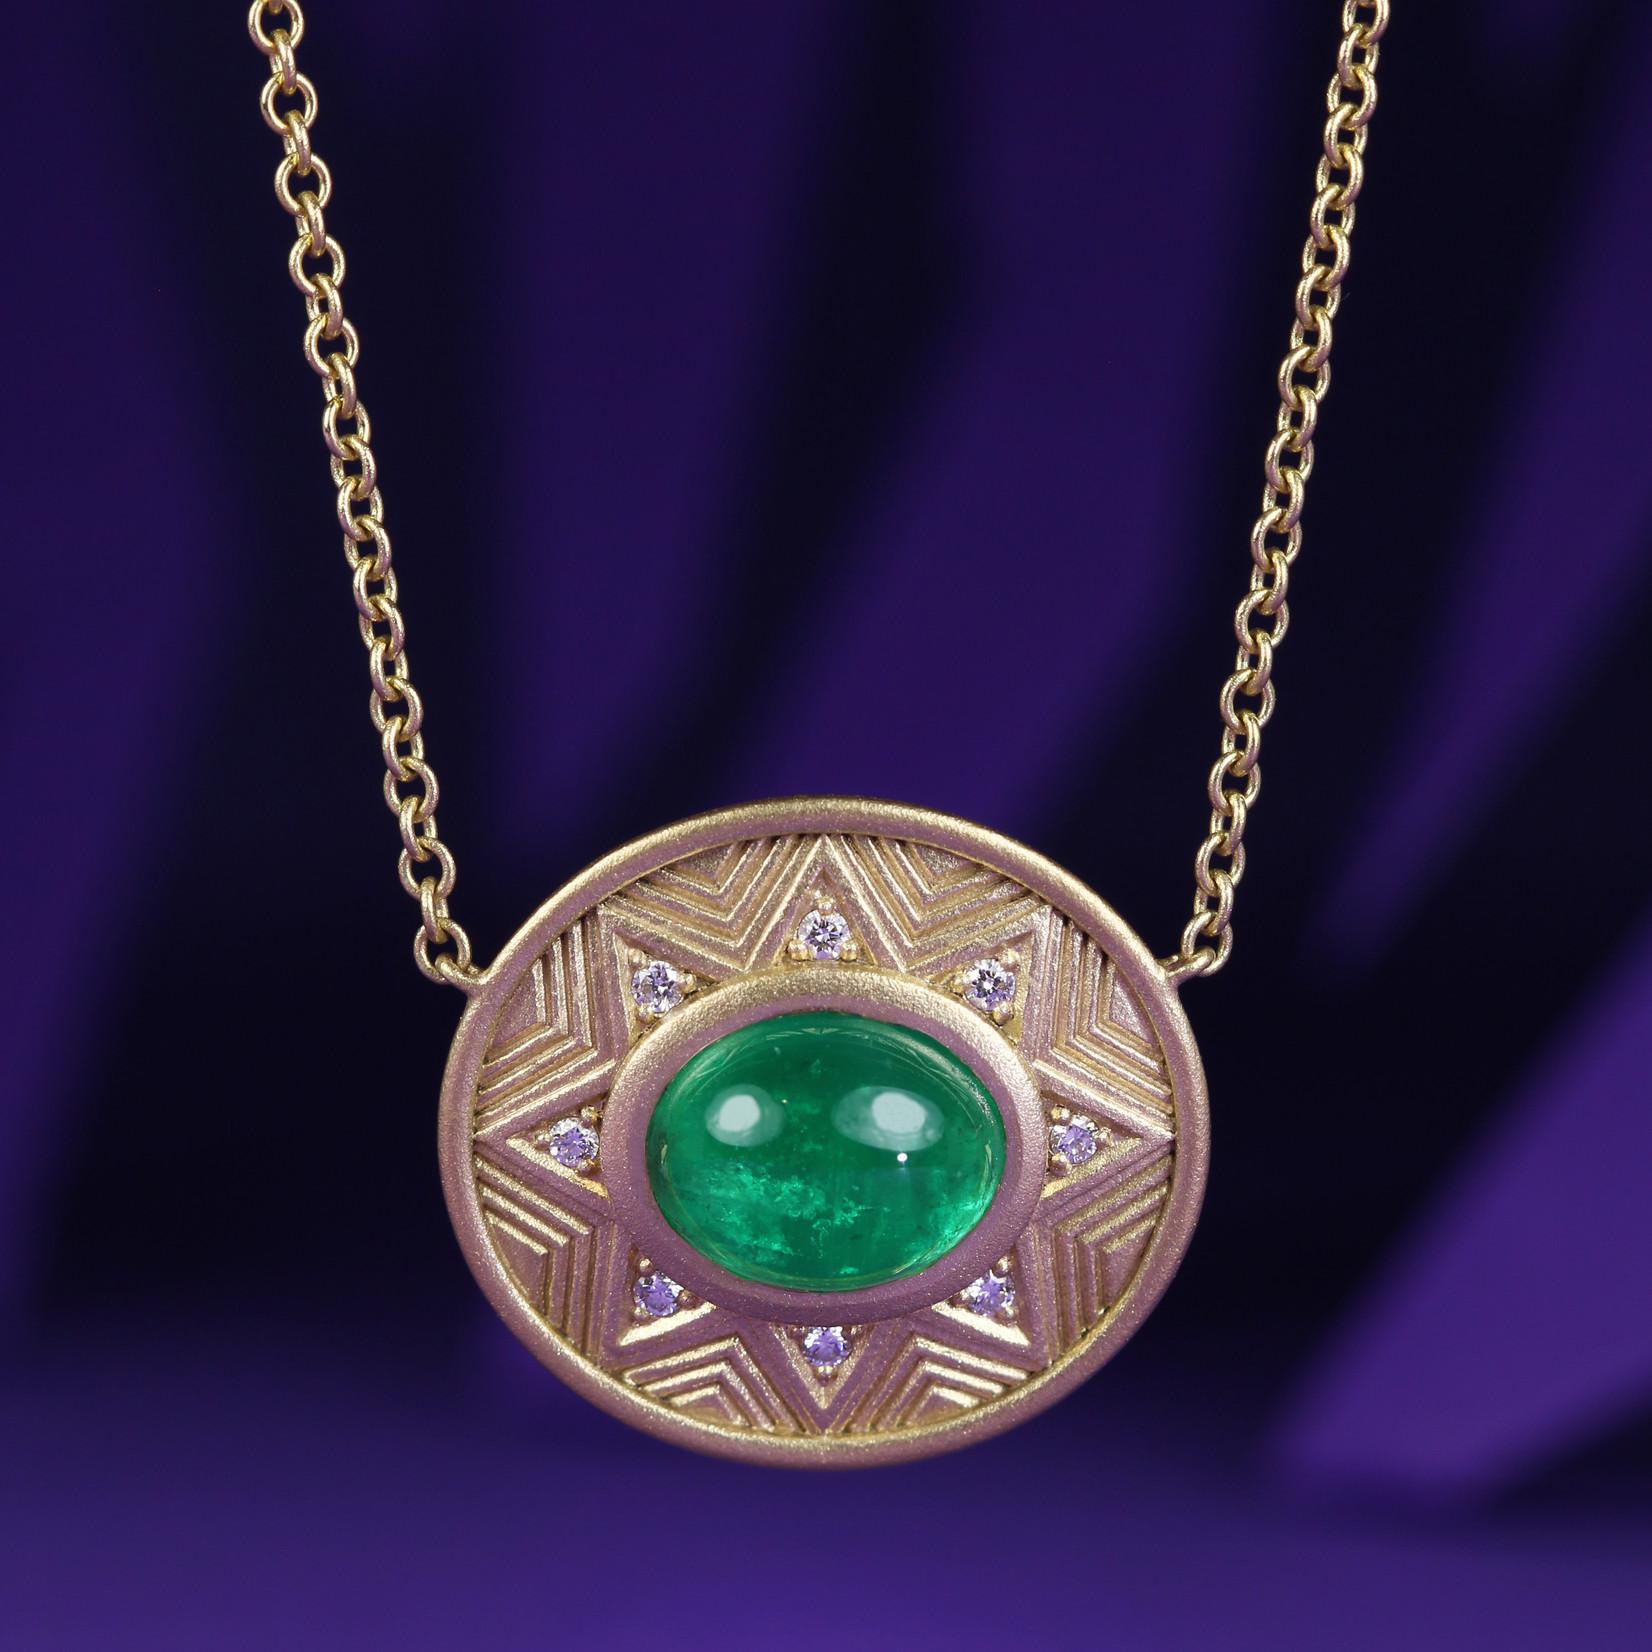 Baxter Moerman Estrella Necklace with Emerald